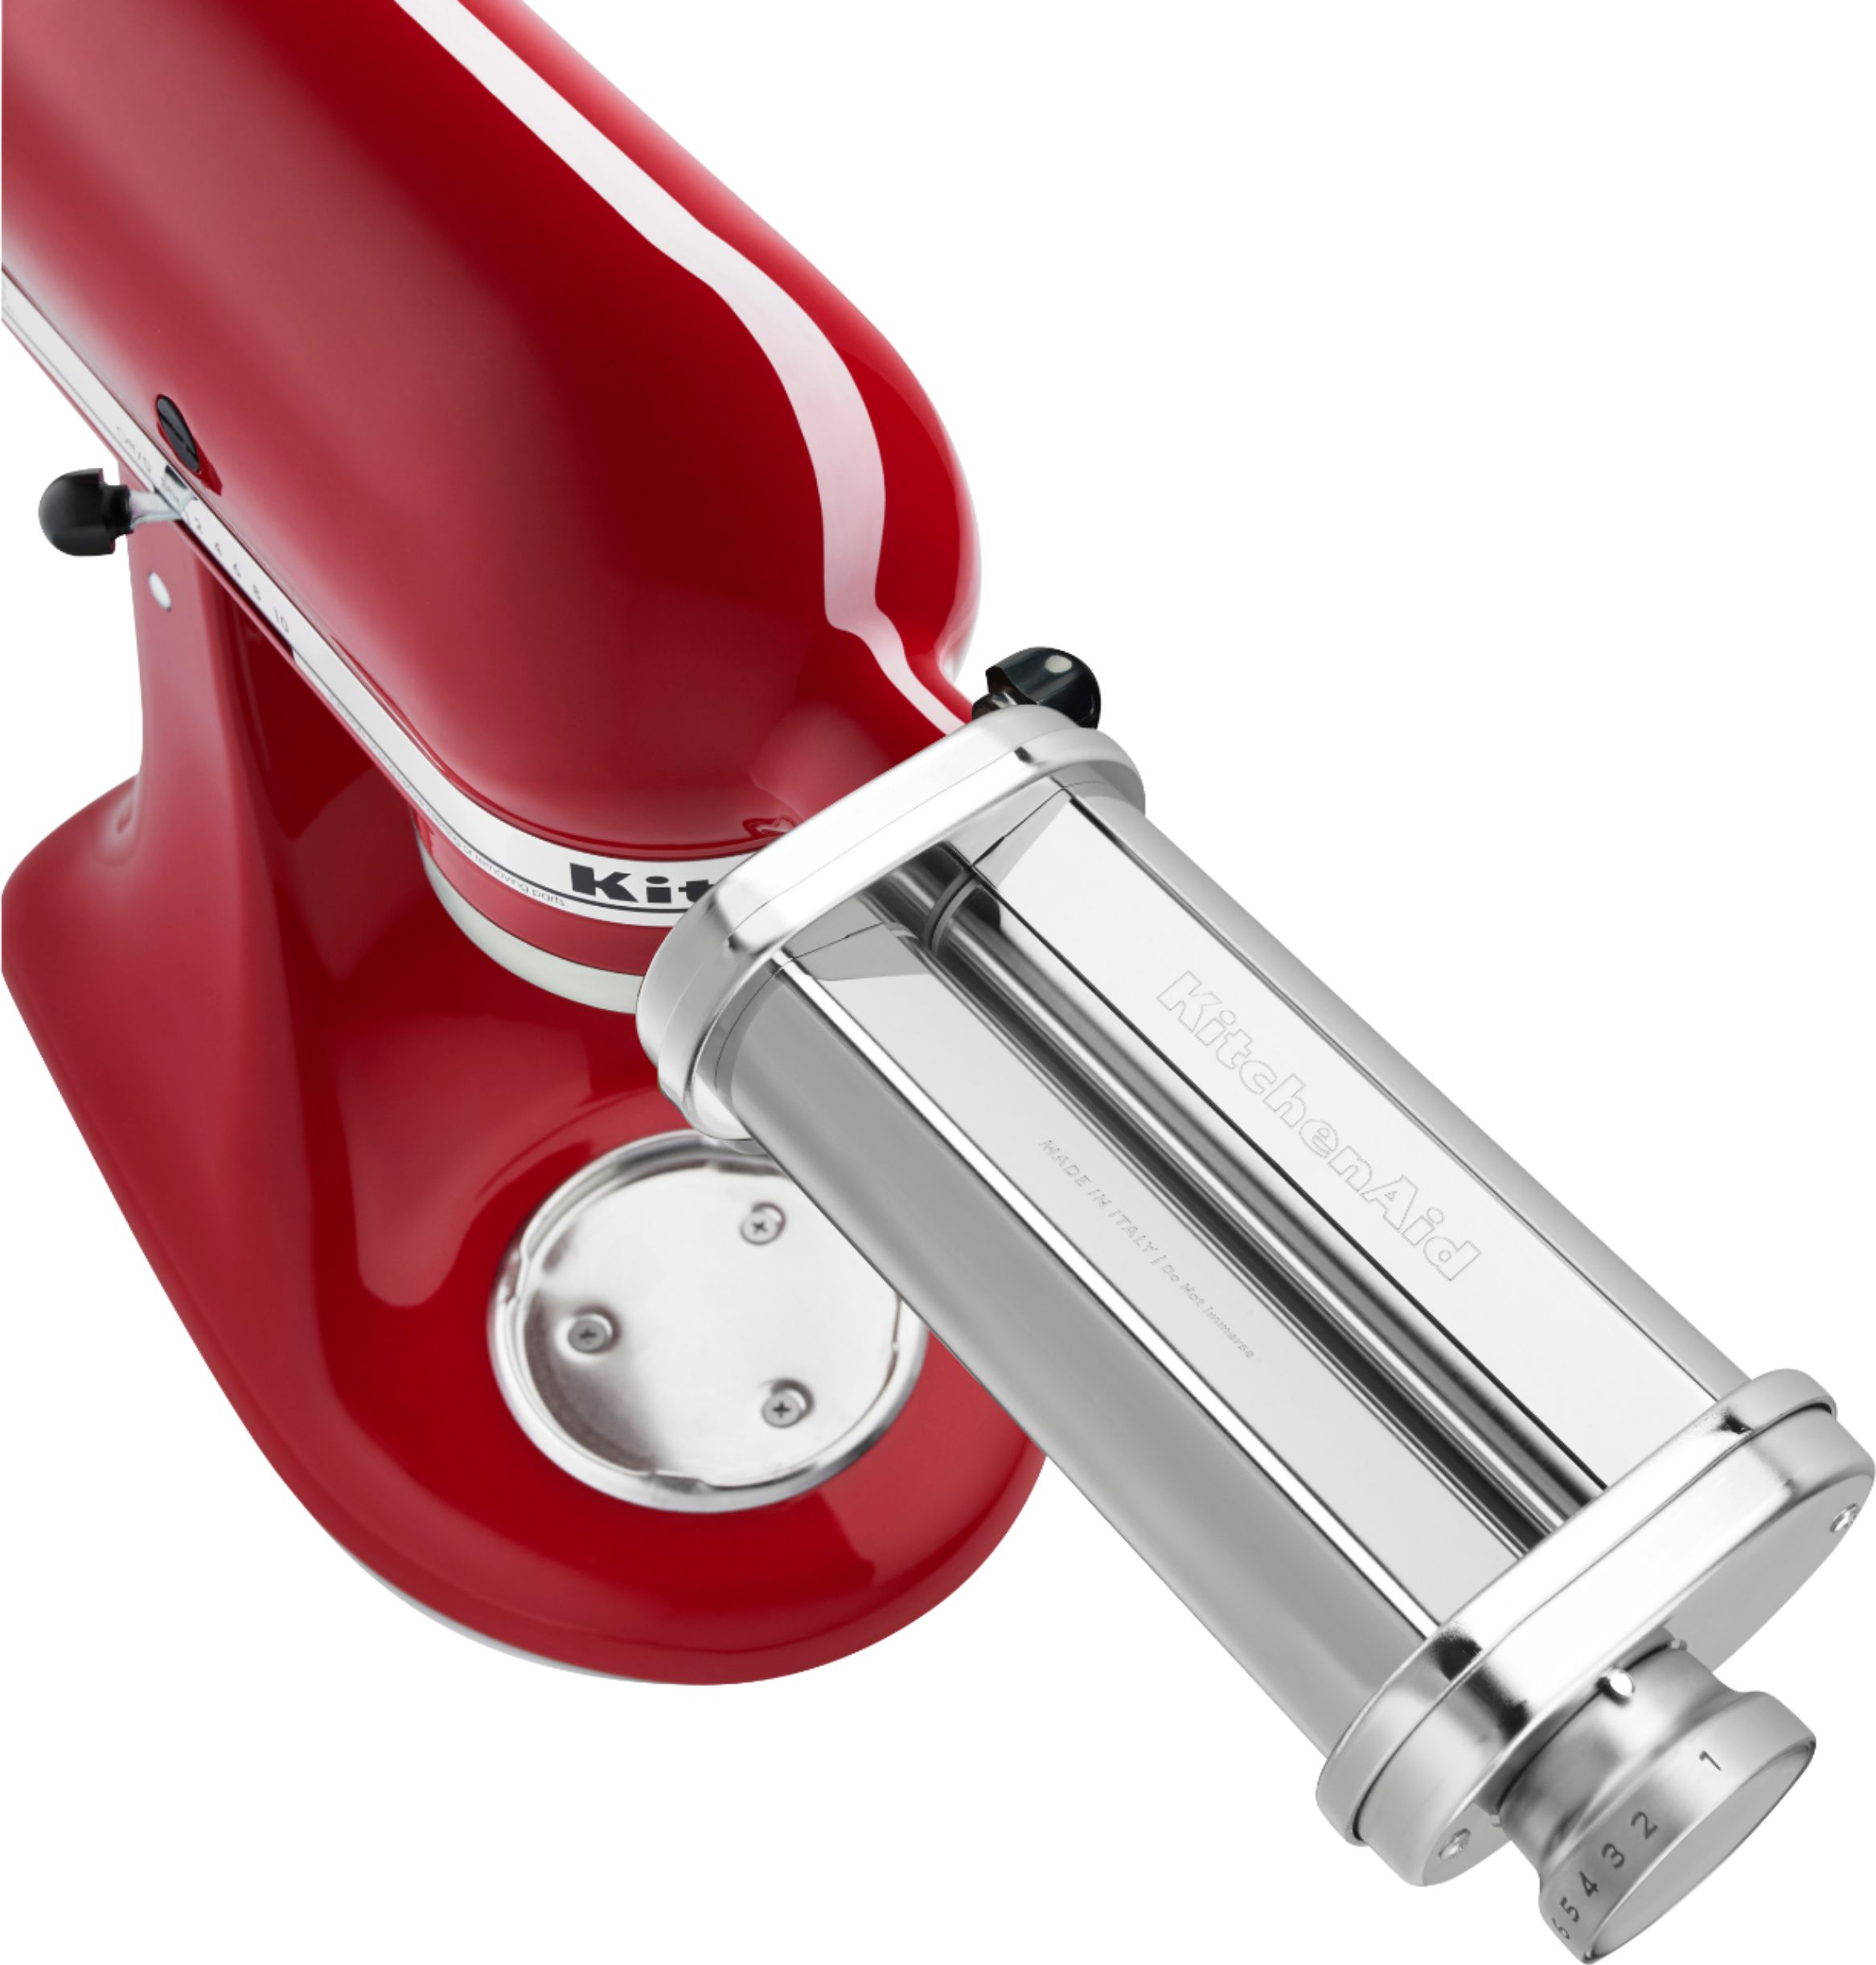 Best Buy: KitchenAid Pro 450 Series Bowl-Lift Stand Mixer Empire Red  KSM450ER